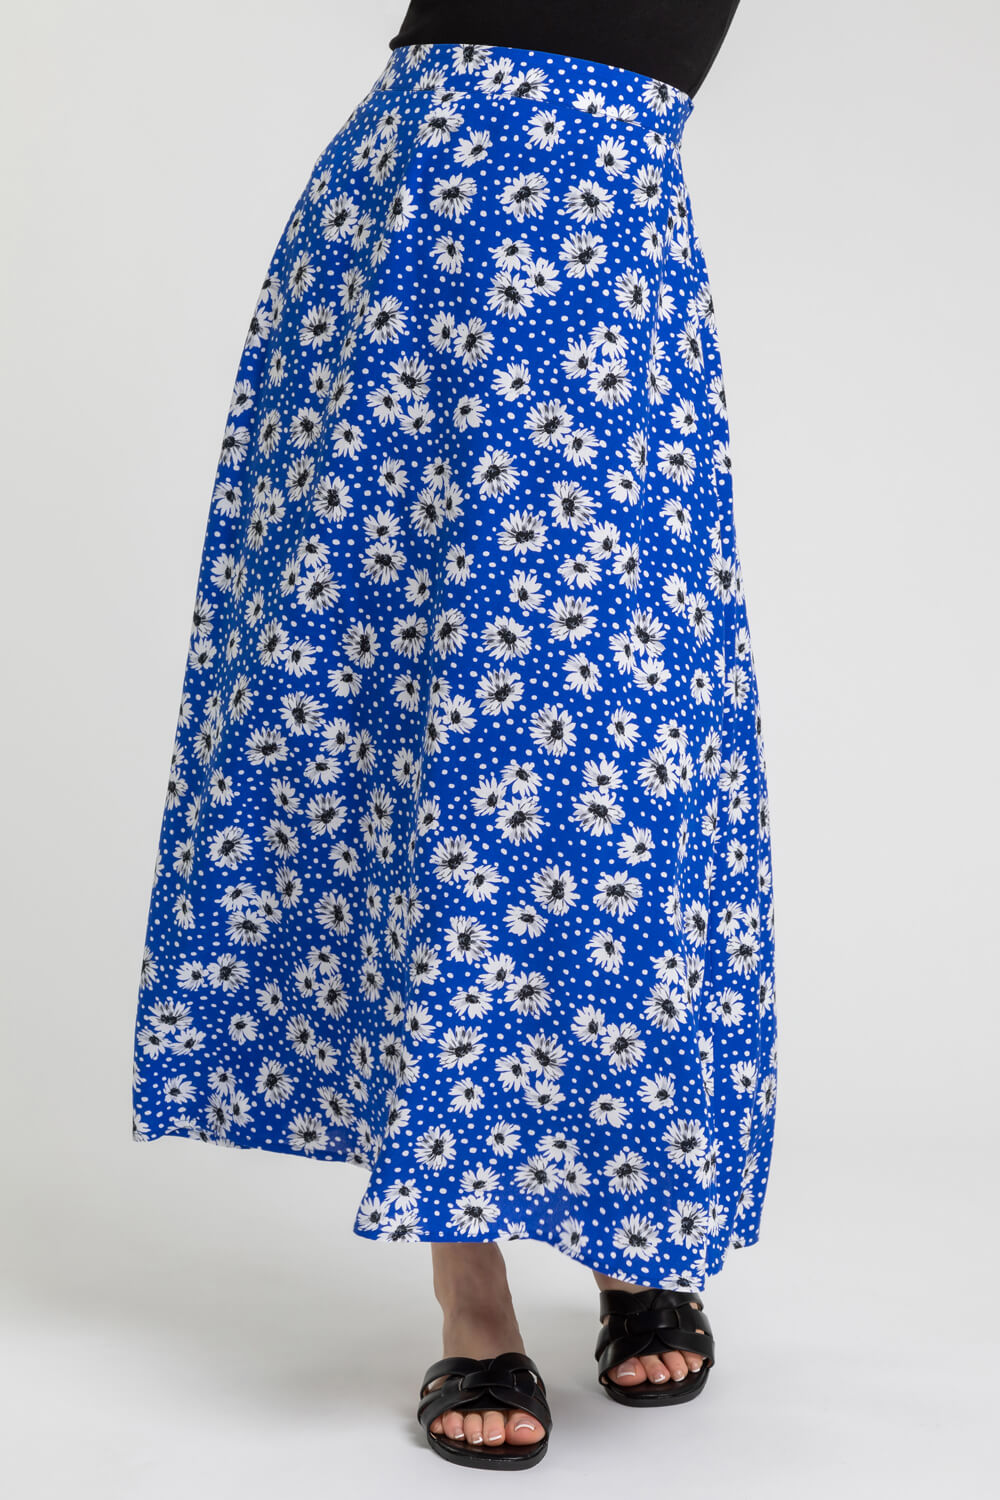 Petite Floral Print A-Line Skirt in Blue | Roman UK